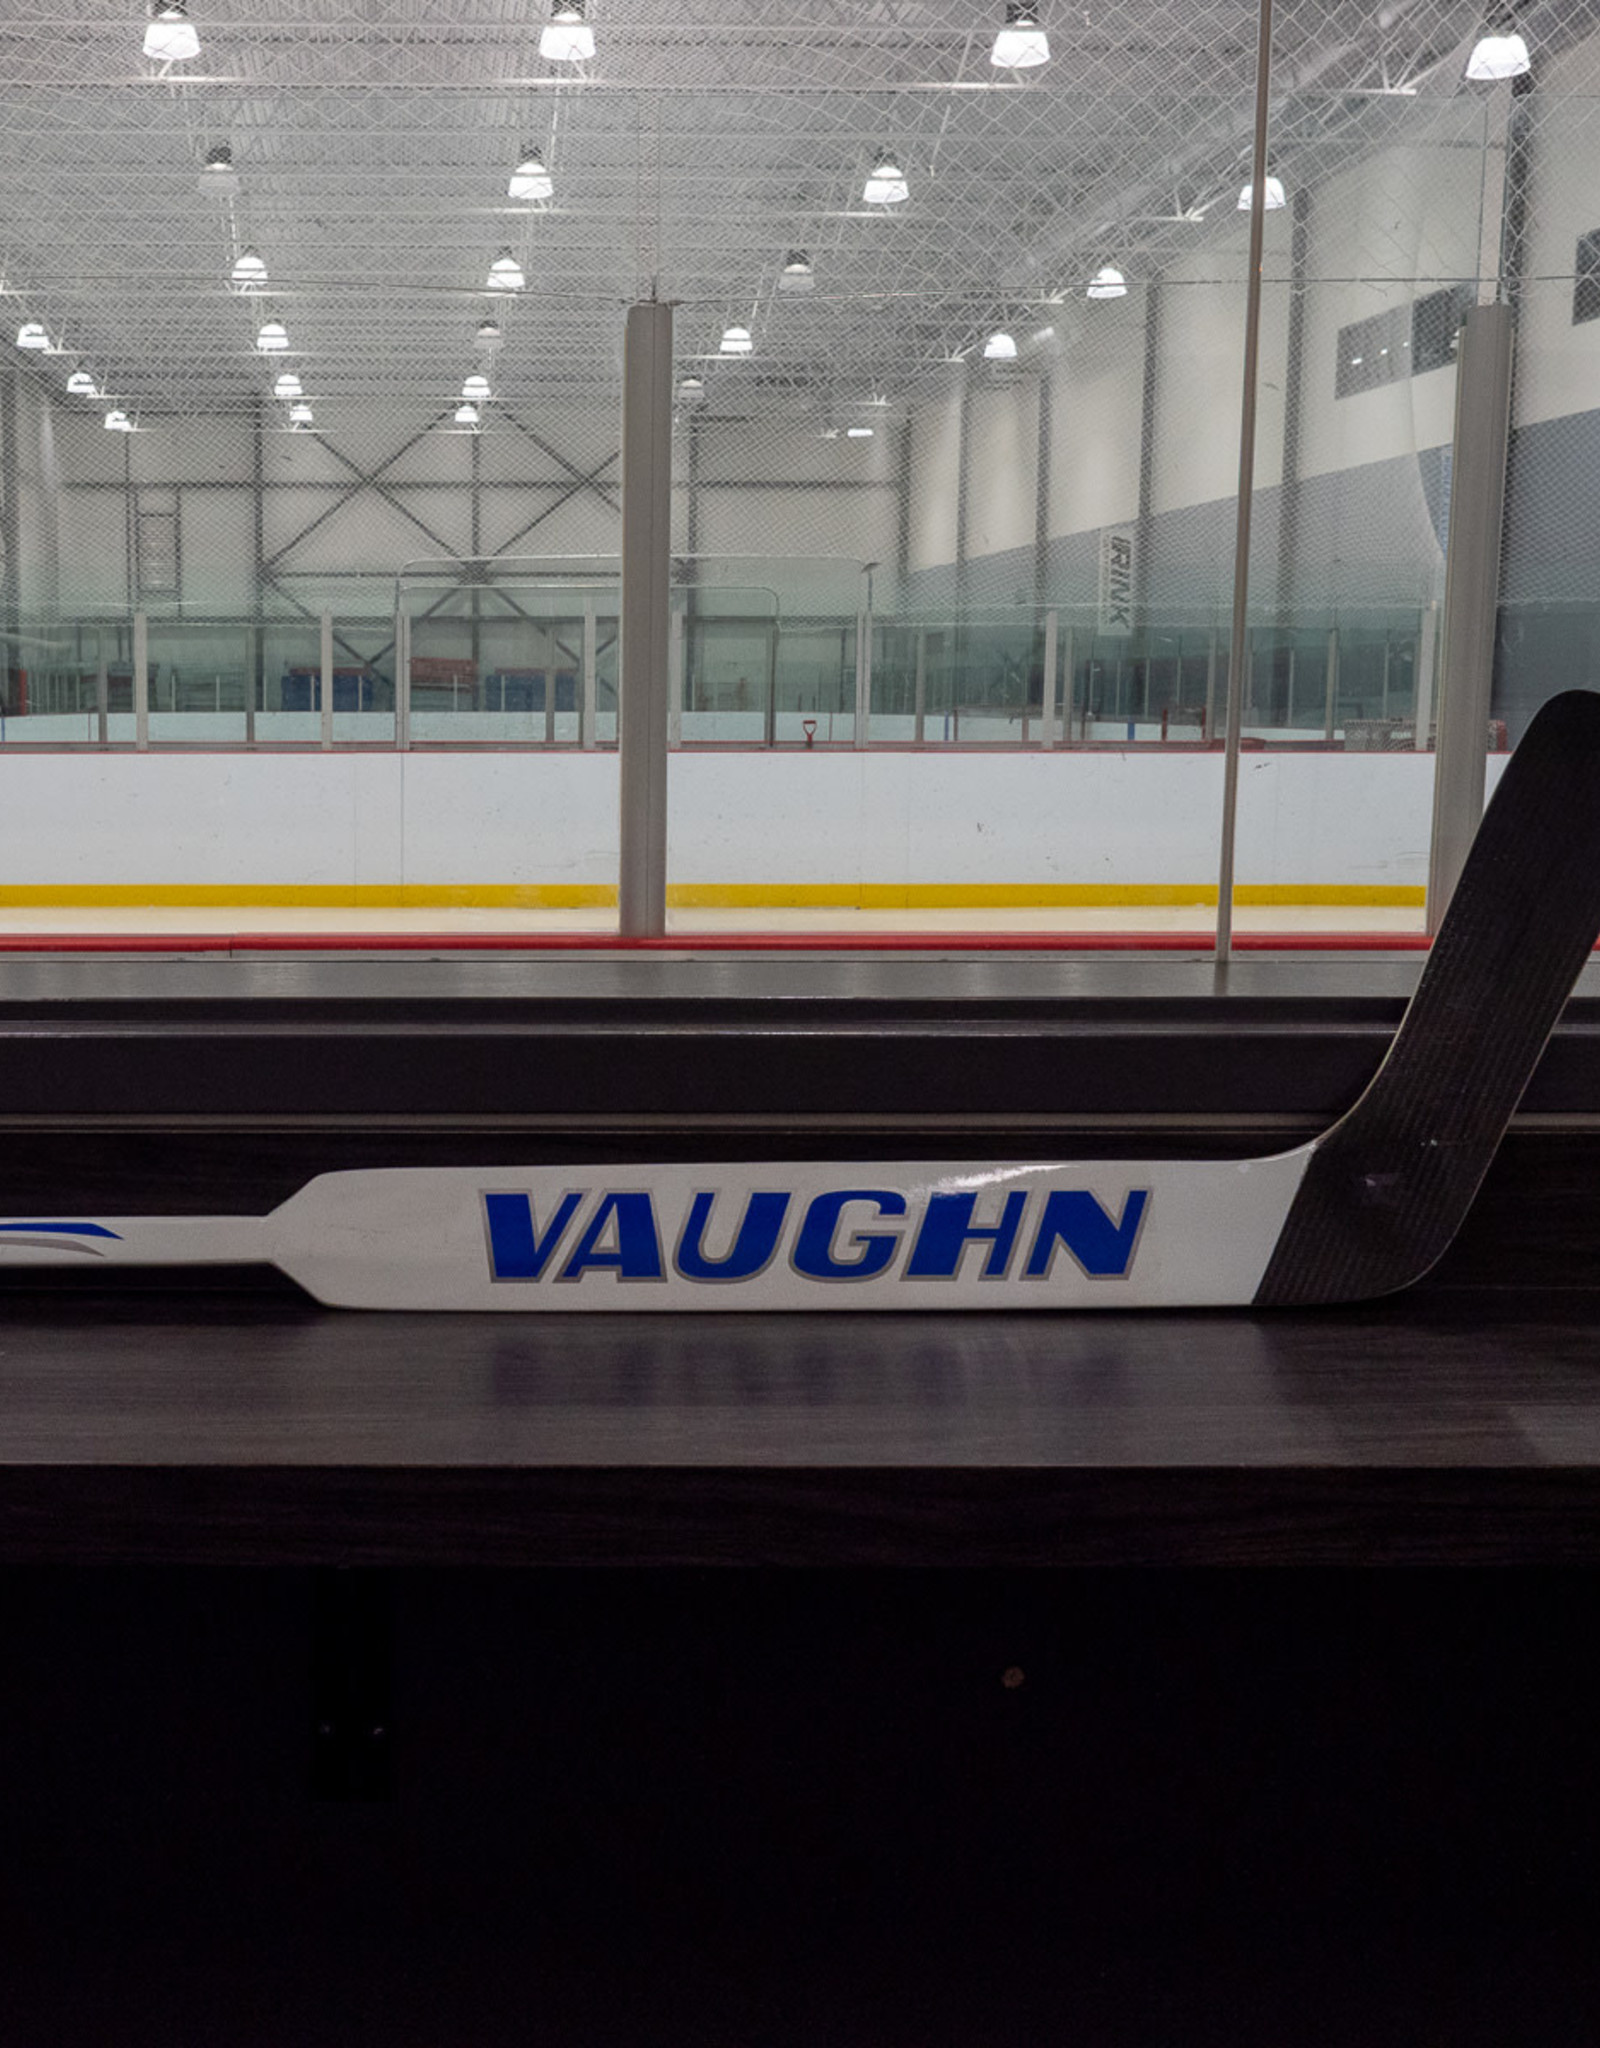 Vaughn VGS XF 1100 Goal Stick 24" White-Navy